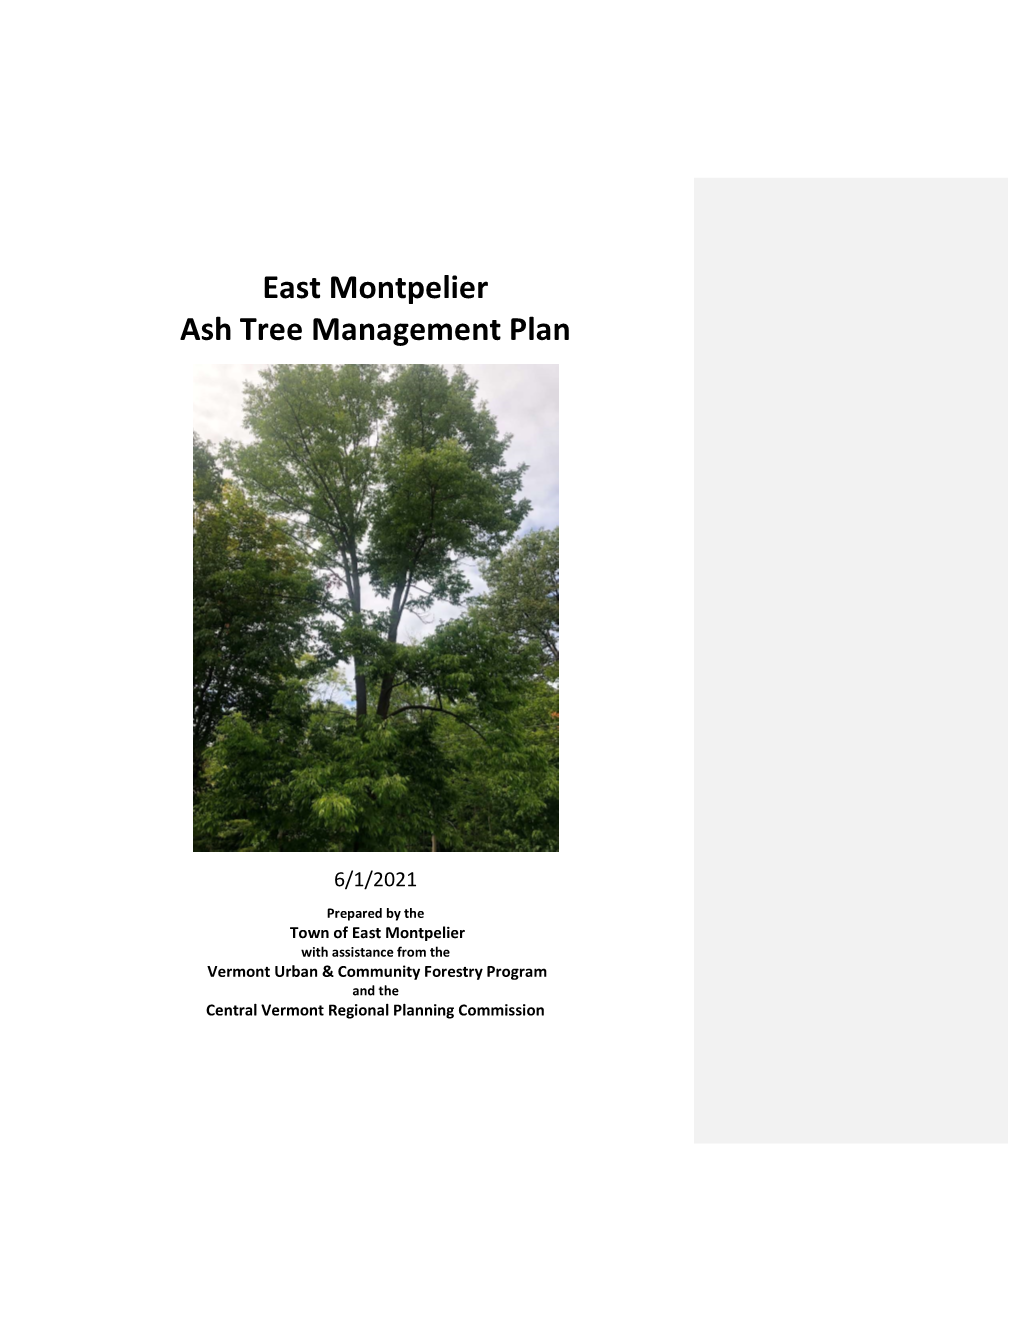 East Montpelier Ash Tree Management Plan